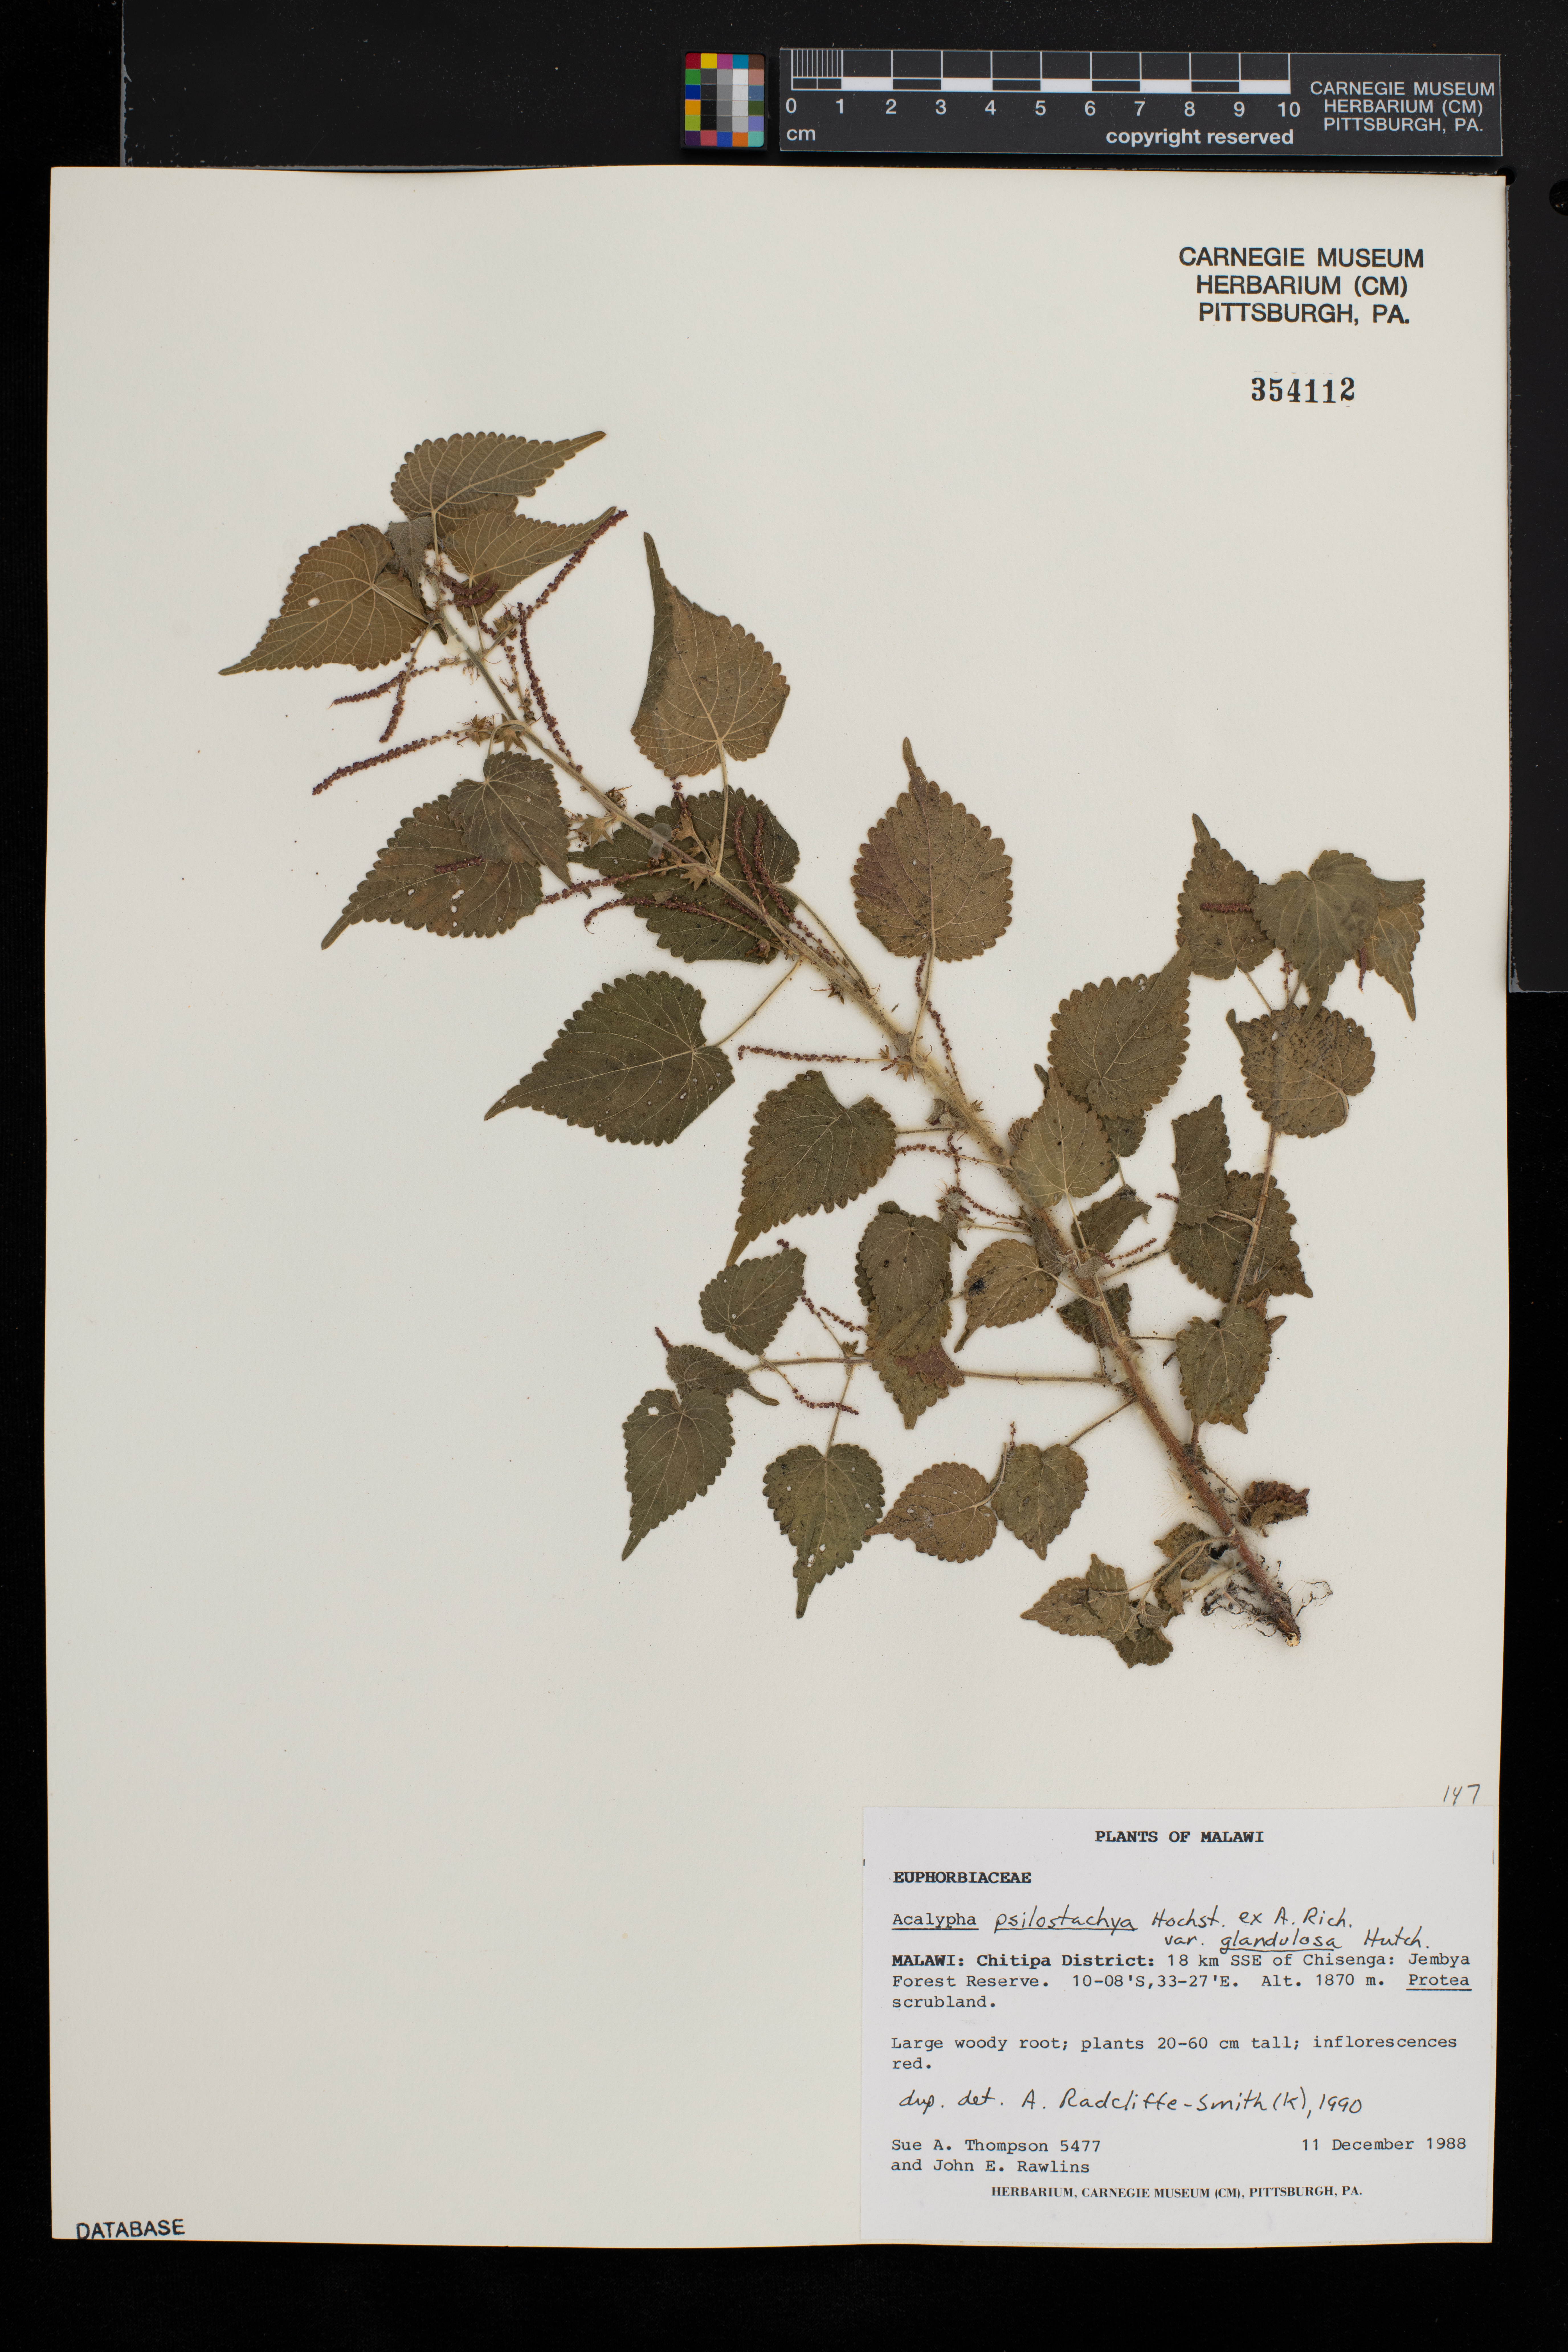 Acalypha psilostachya var. glandulosa image